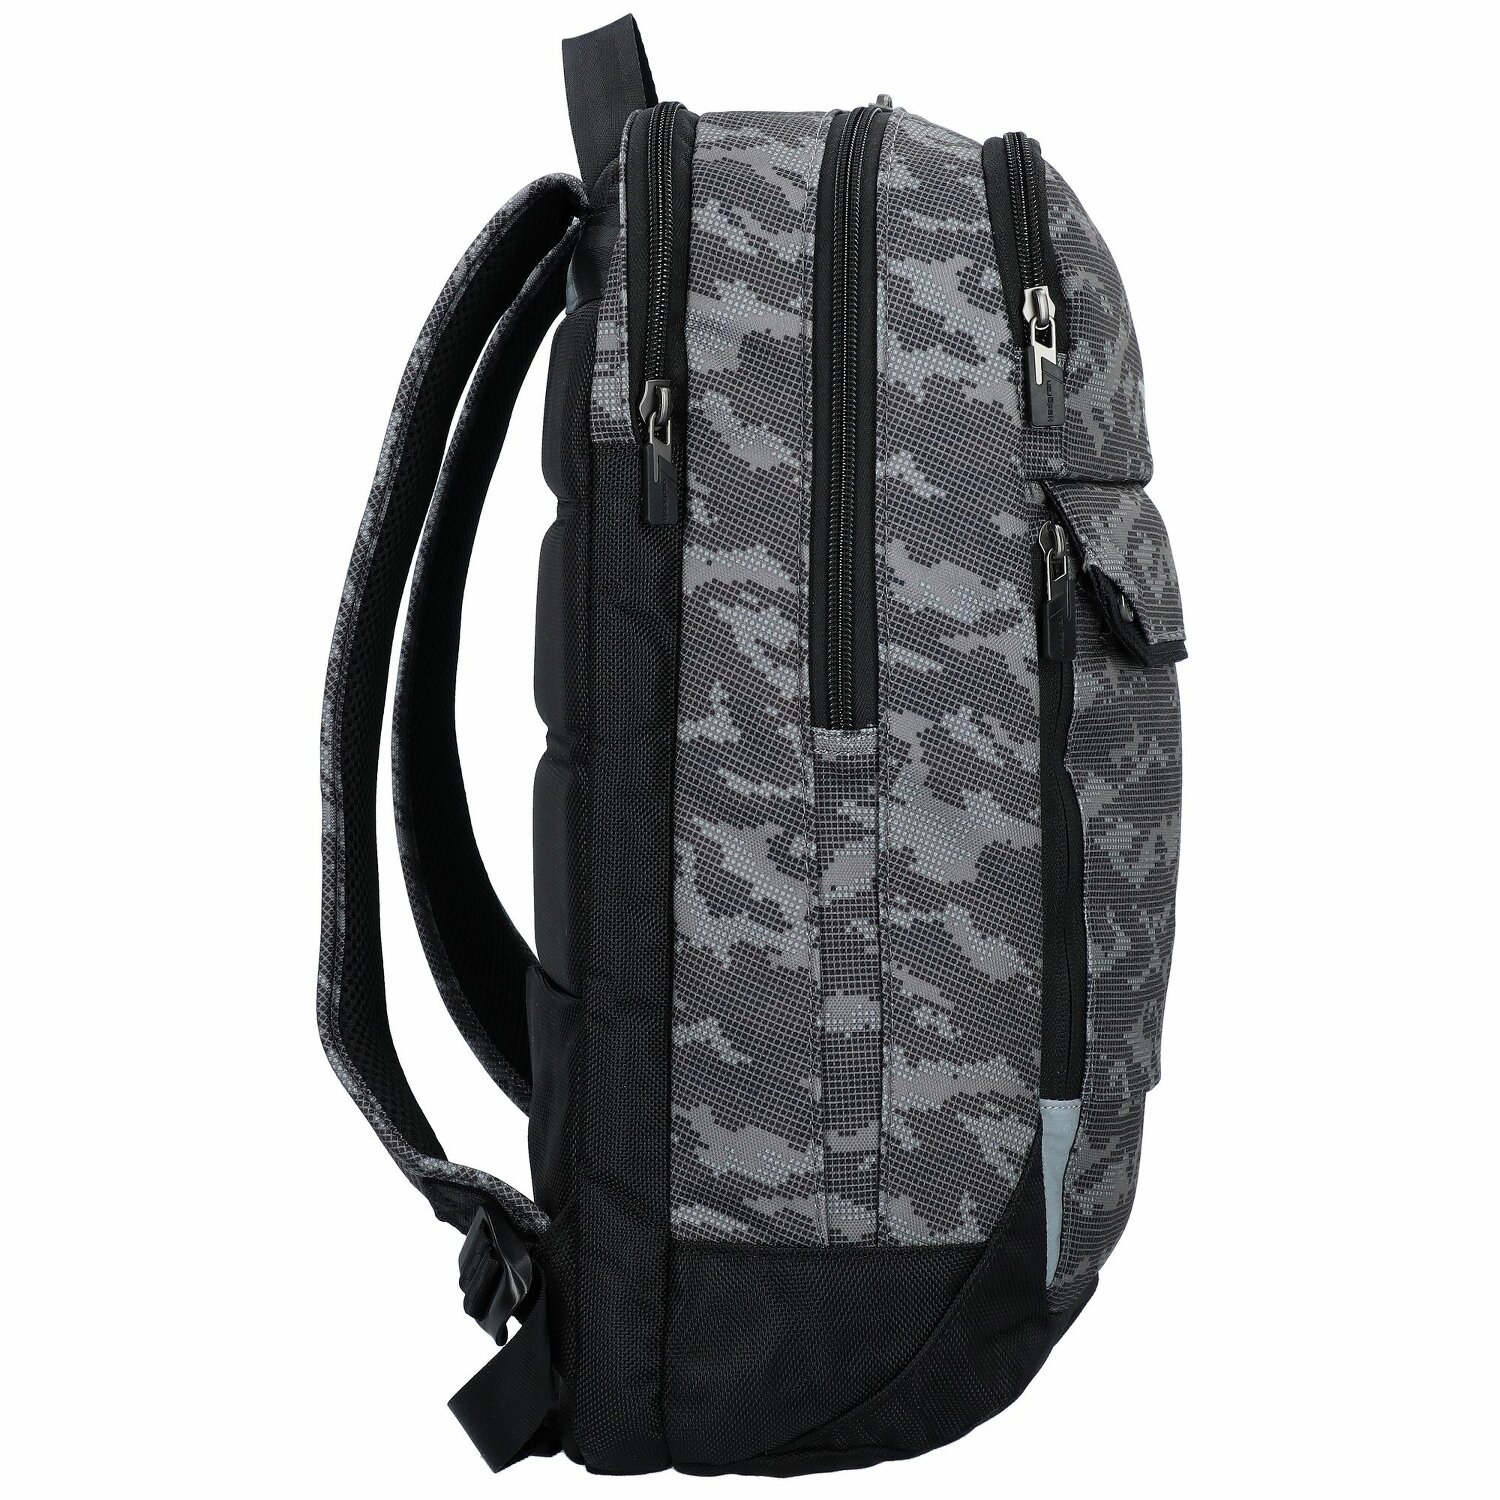 Samsonite MIDTOWN mochila para portatil M 15.6 camo